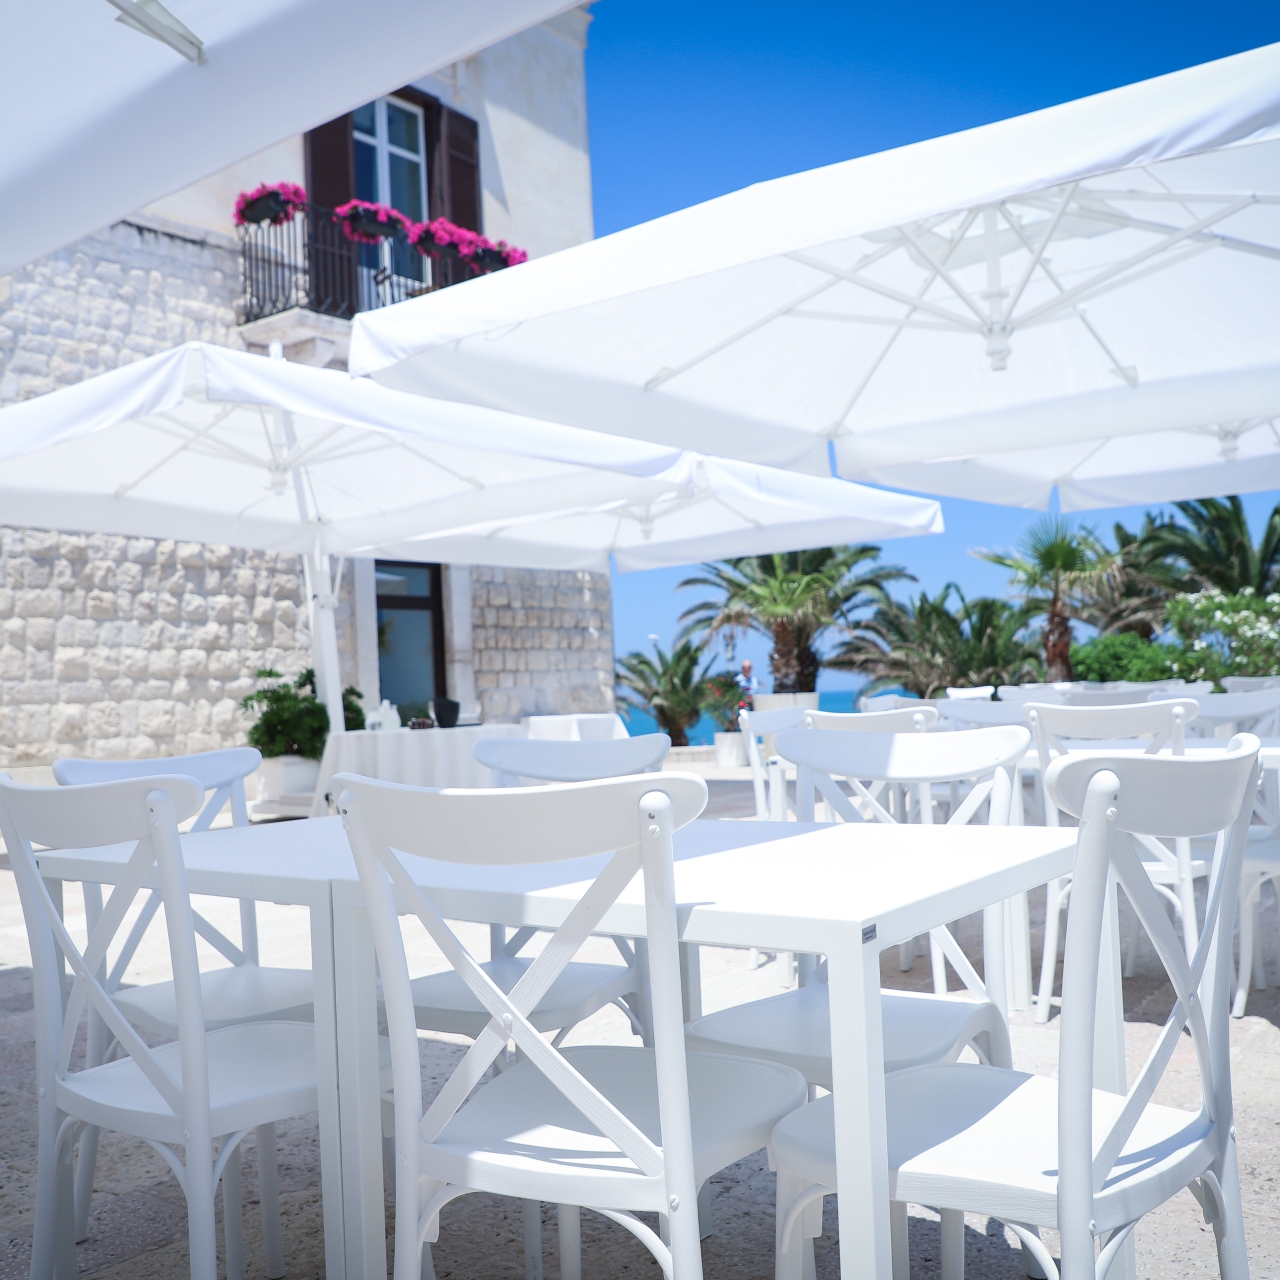 Palazzo Filisio Hotel Regia Restaurant - 4 HRS star hotel in Trani (Apulia)